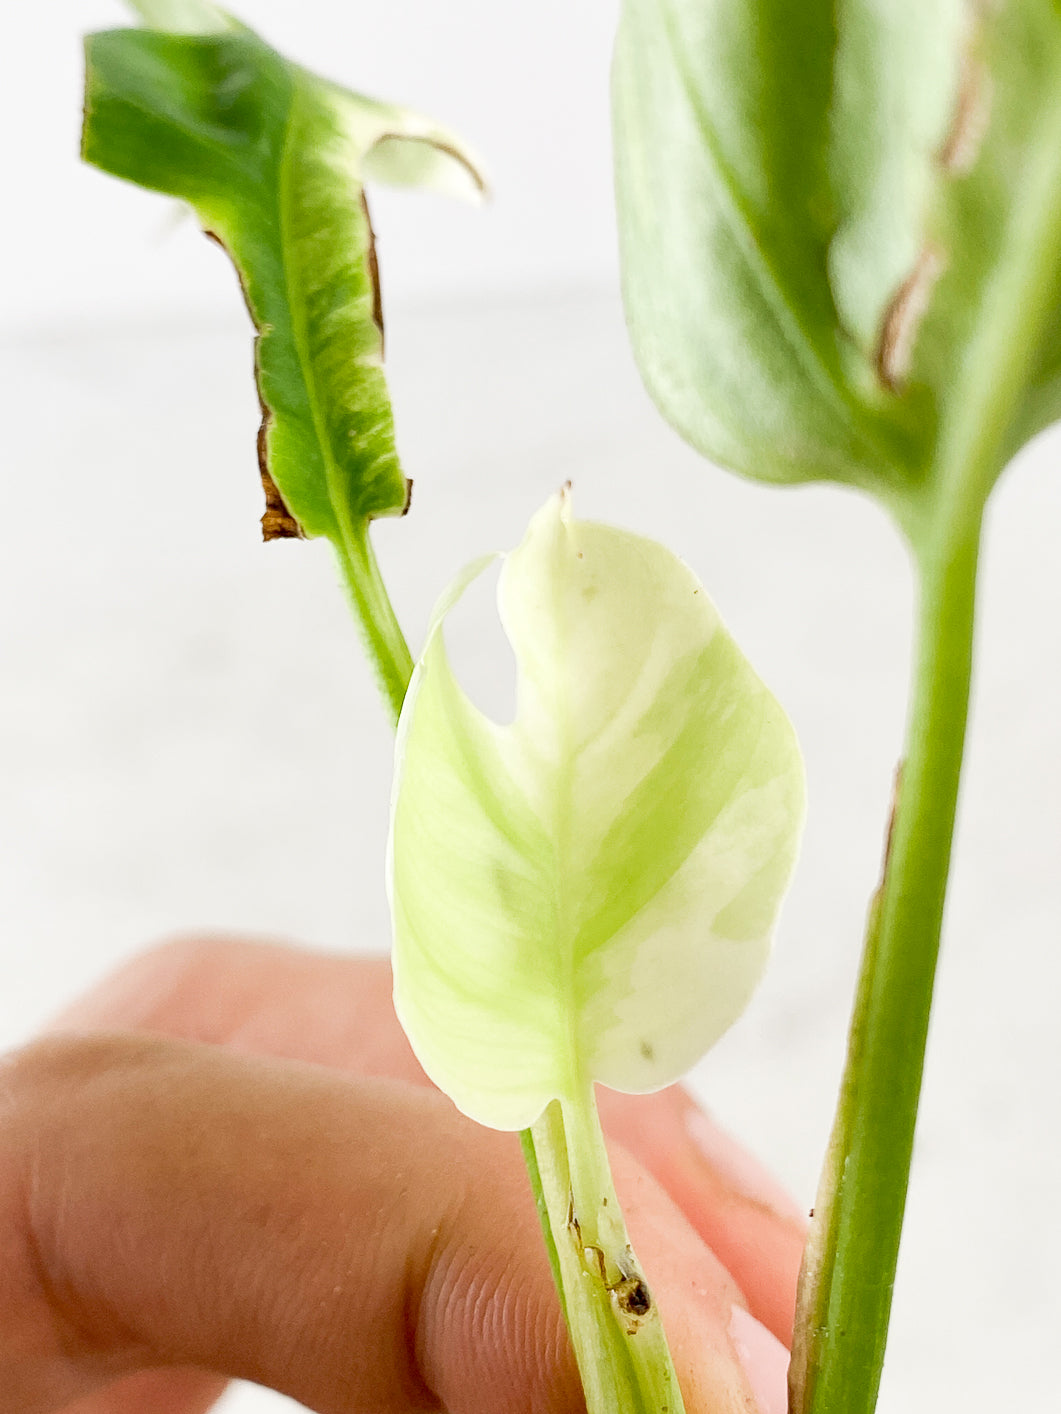 rhaphidophora tetrasperma variegated 3 leaves  (Newest leaf is Highly Variegated  )